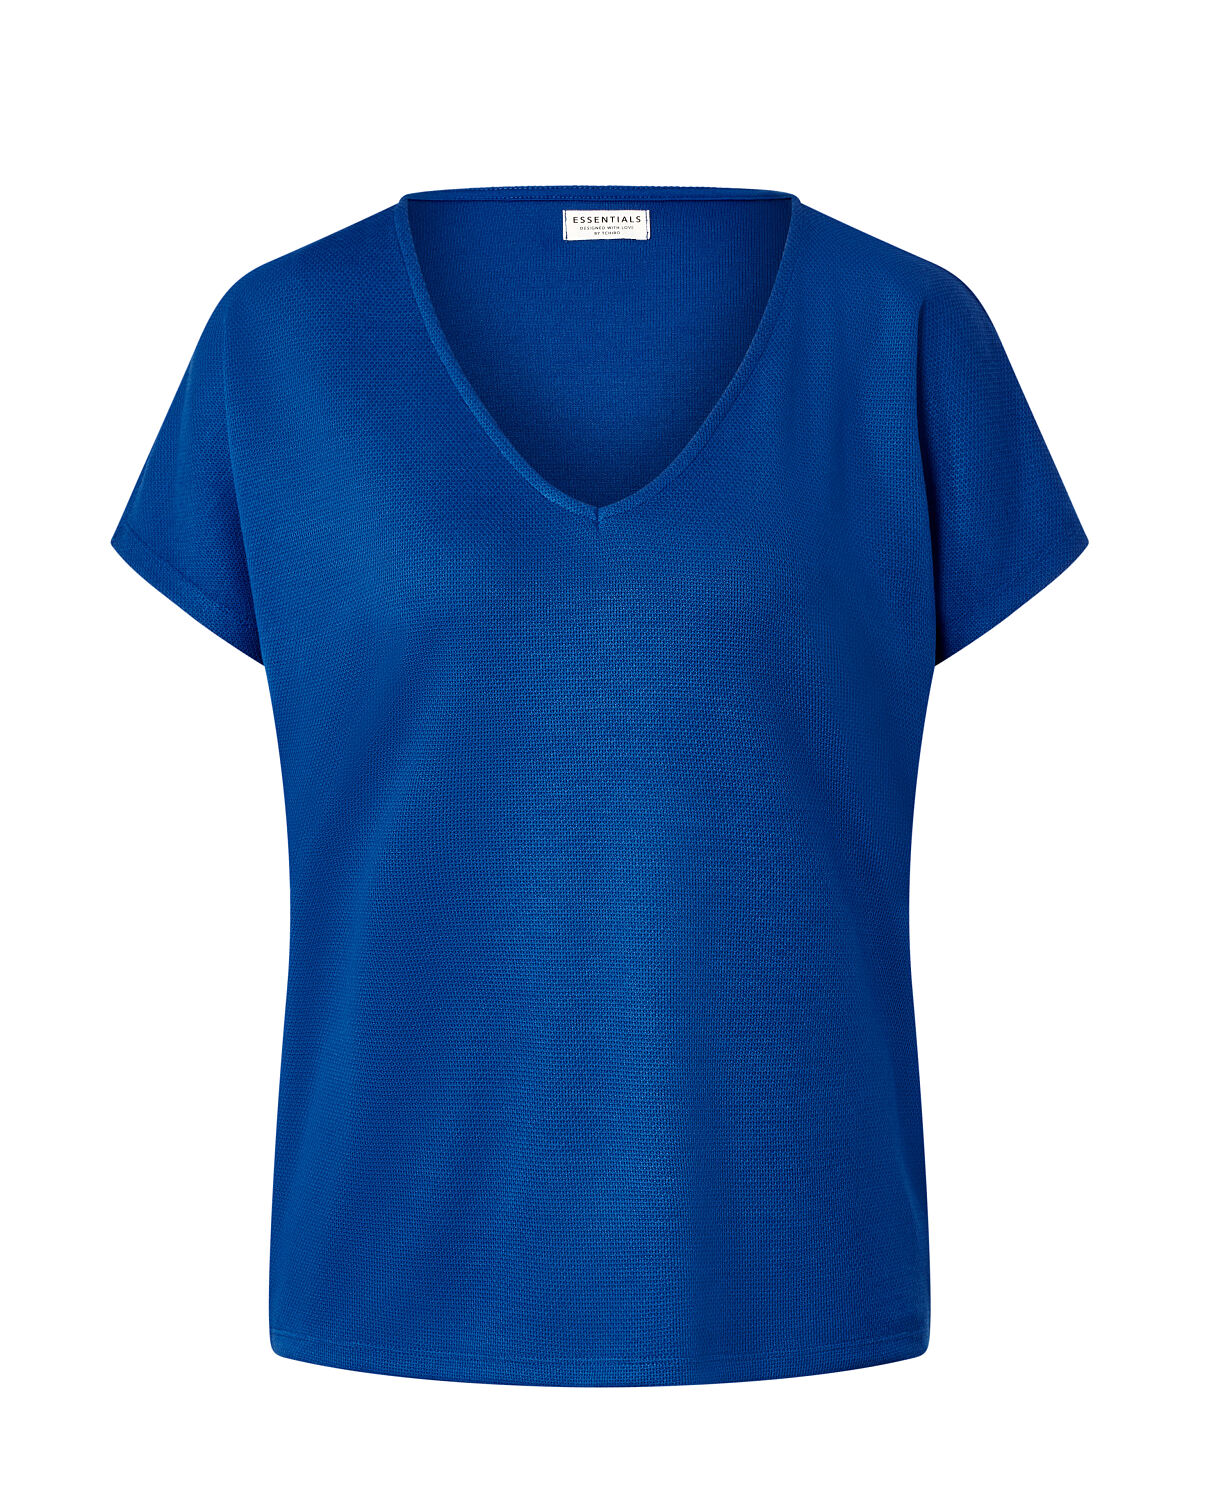 TCHIBO_129924 Piqué-Jerseyshirt, Kobalt FS 1 19.23